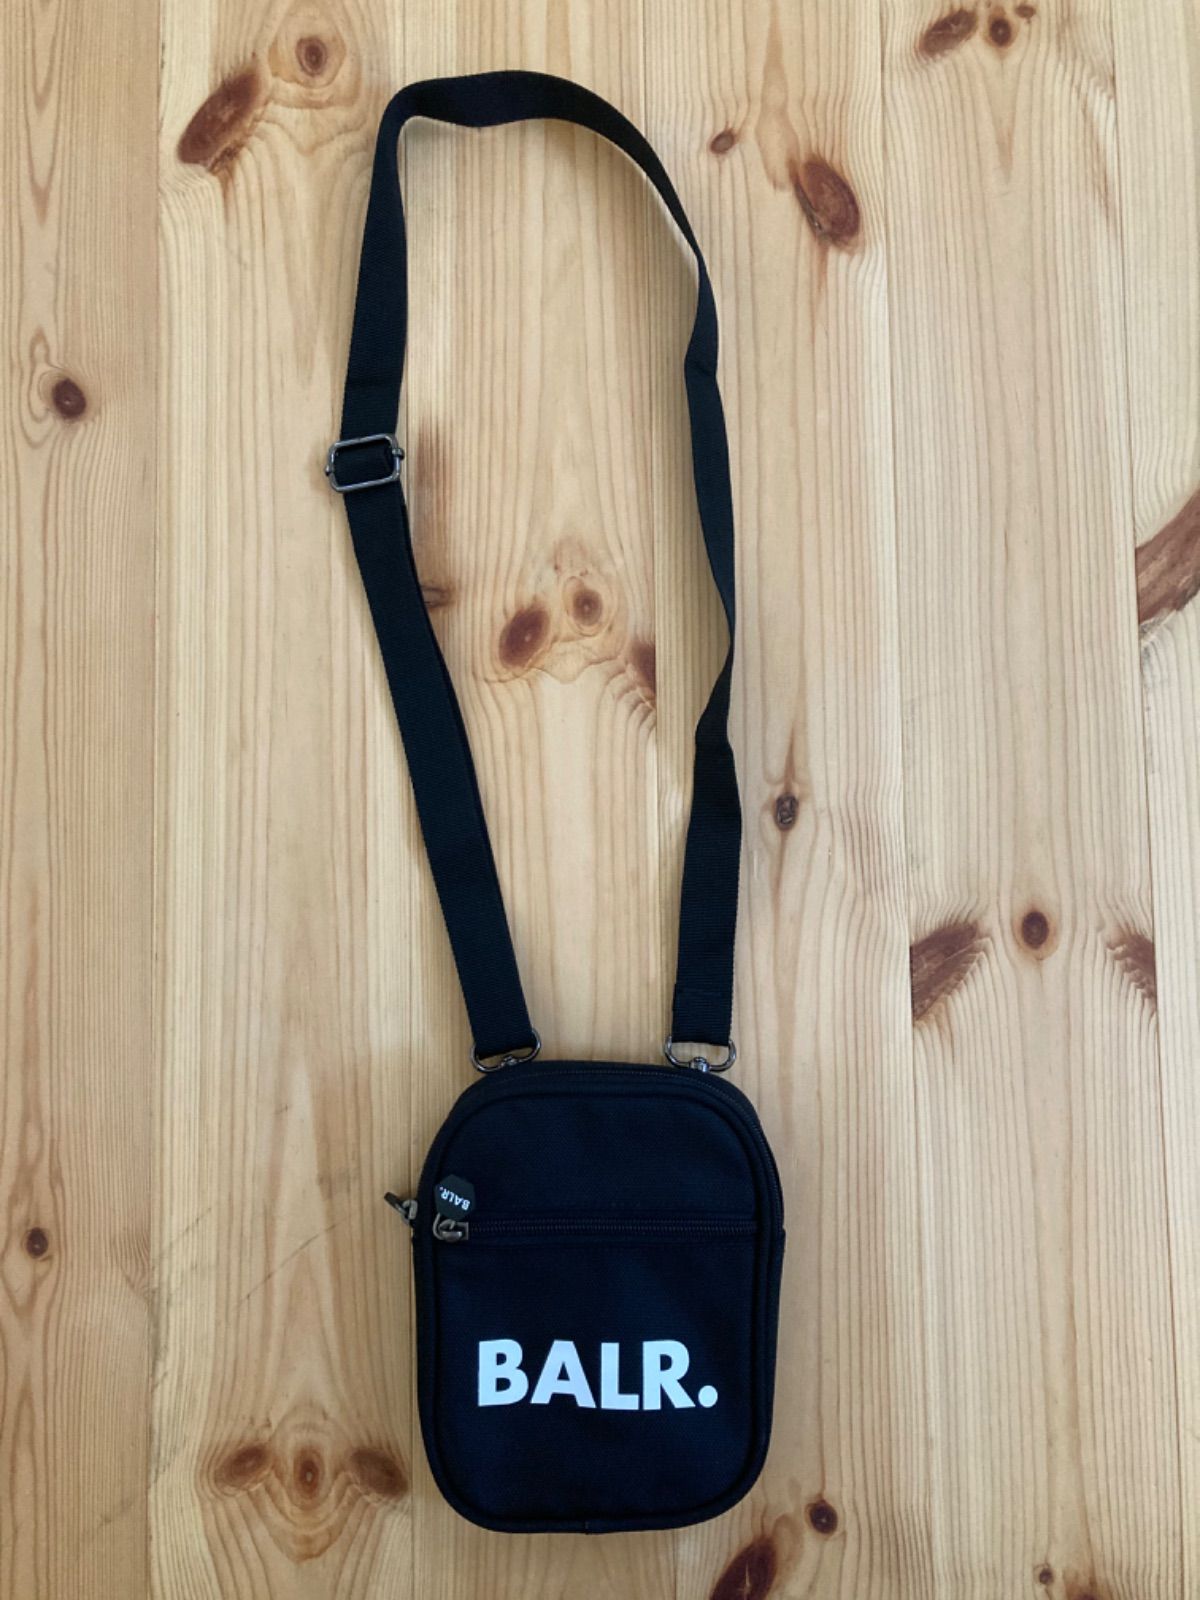 BALR. ボーラー U-Series Small Cross Body Bag